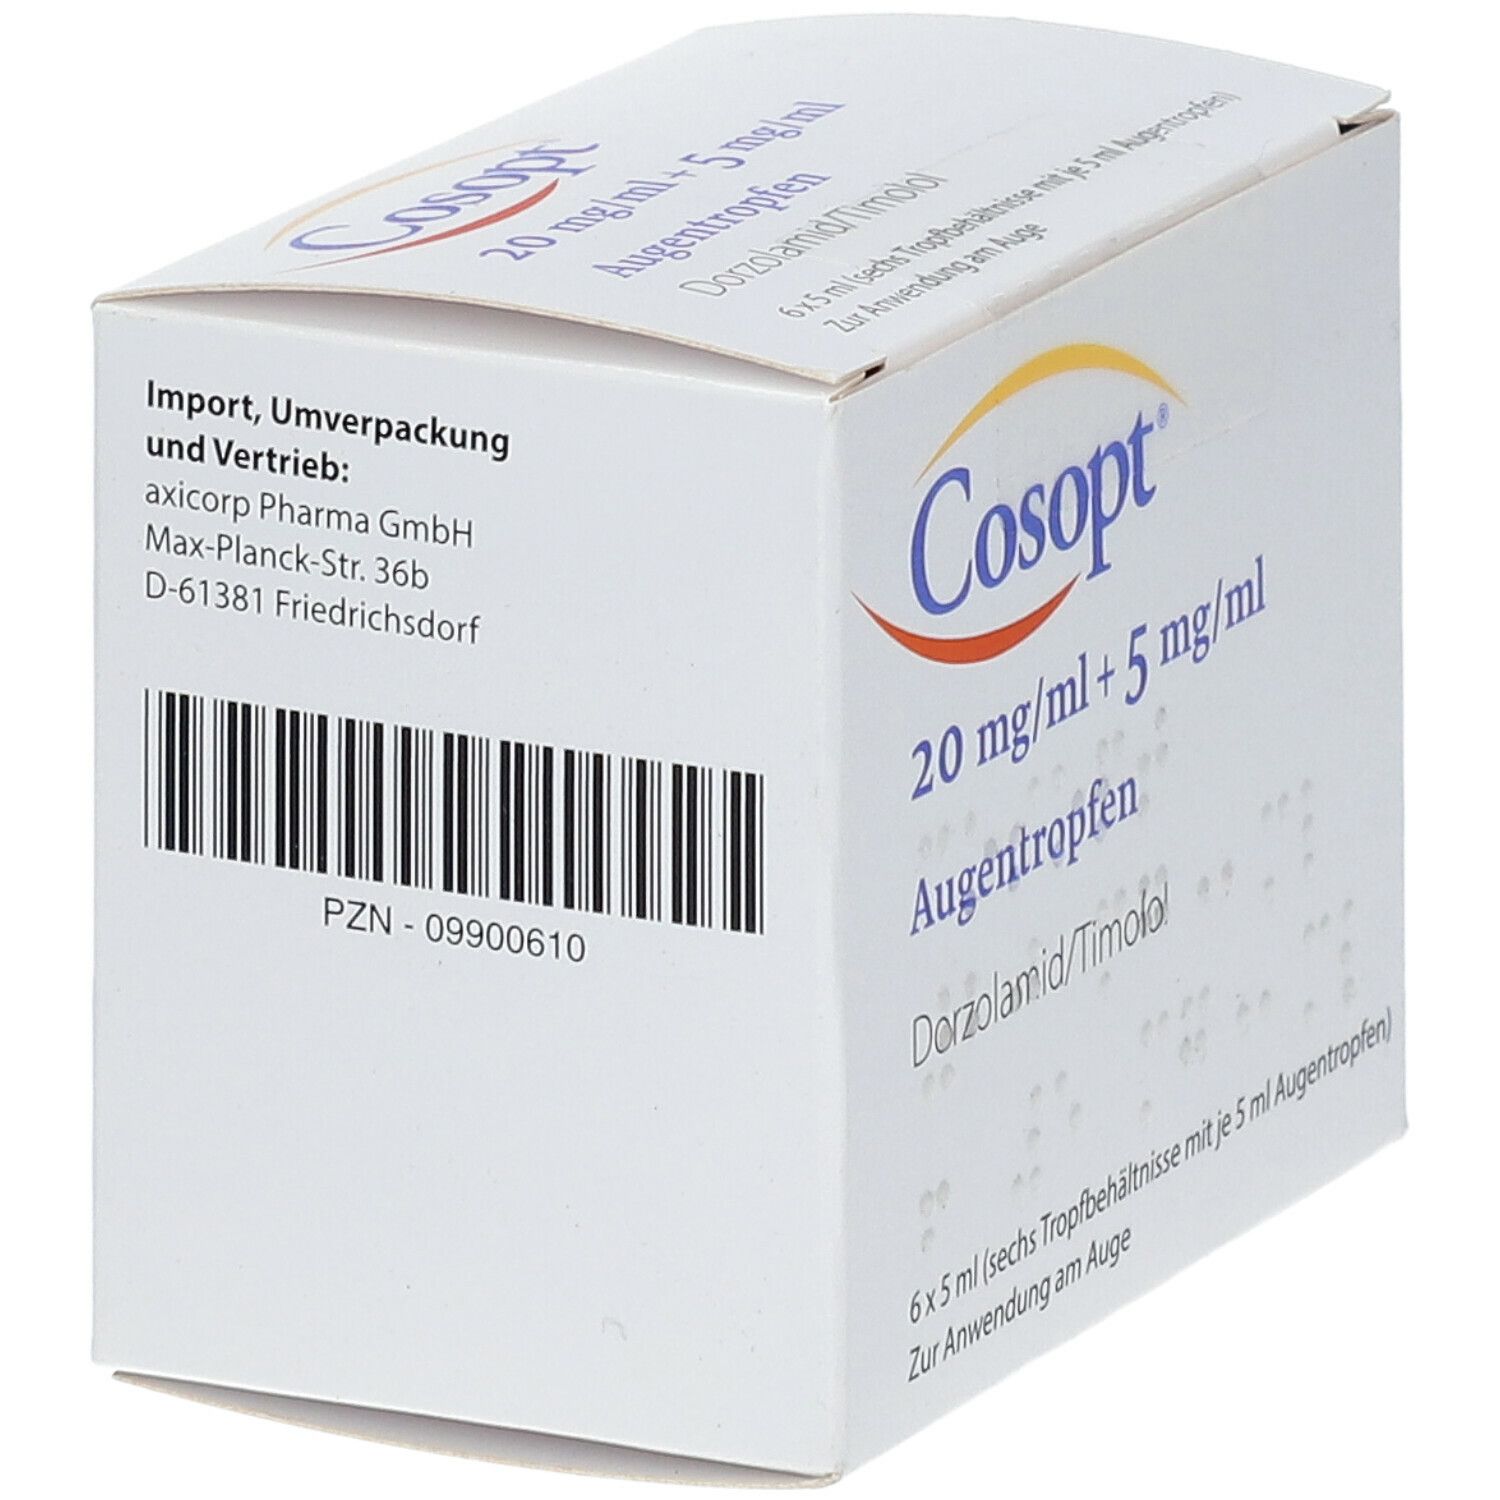 Cosopt 20 mg/ml + 5 mg/ml